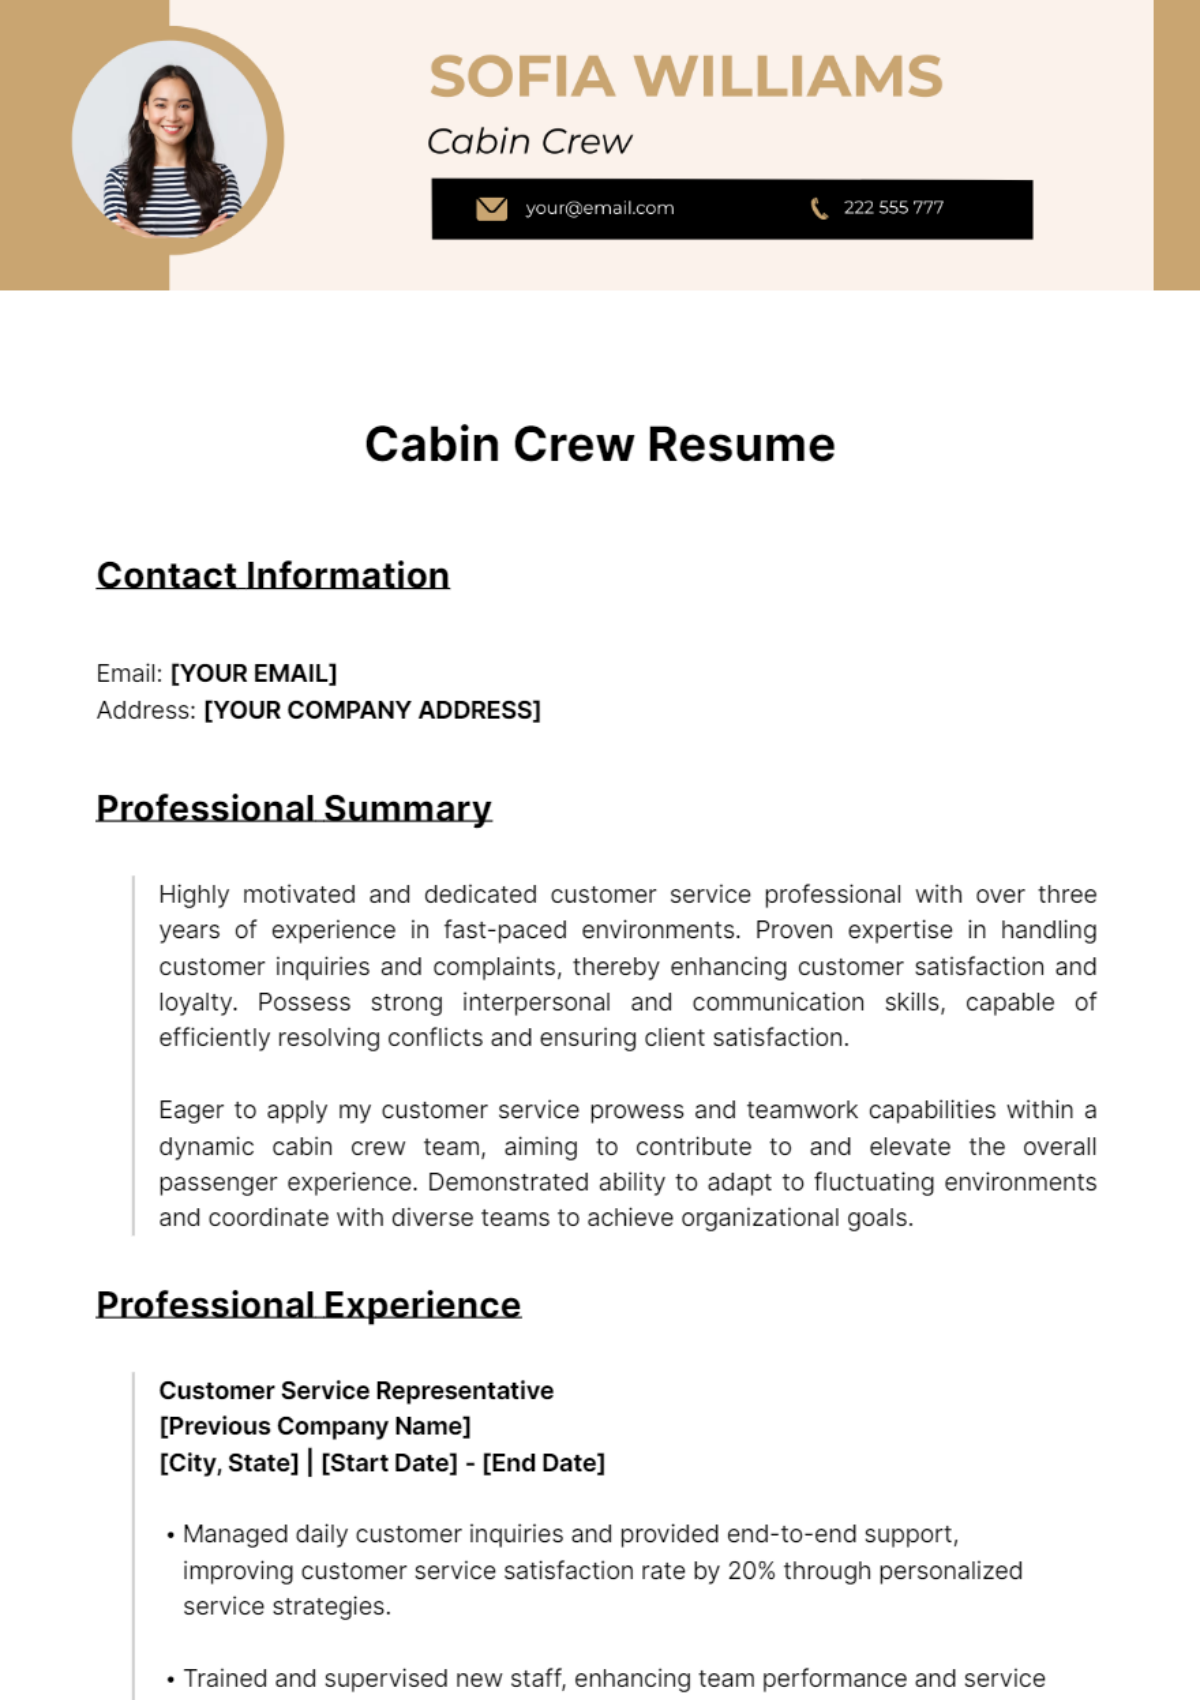 Cabin Crew Resume Template